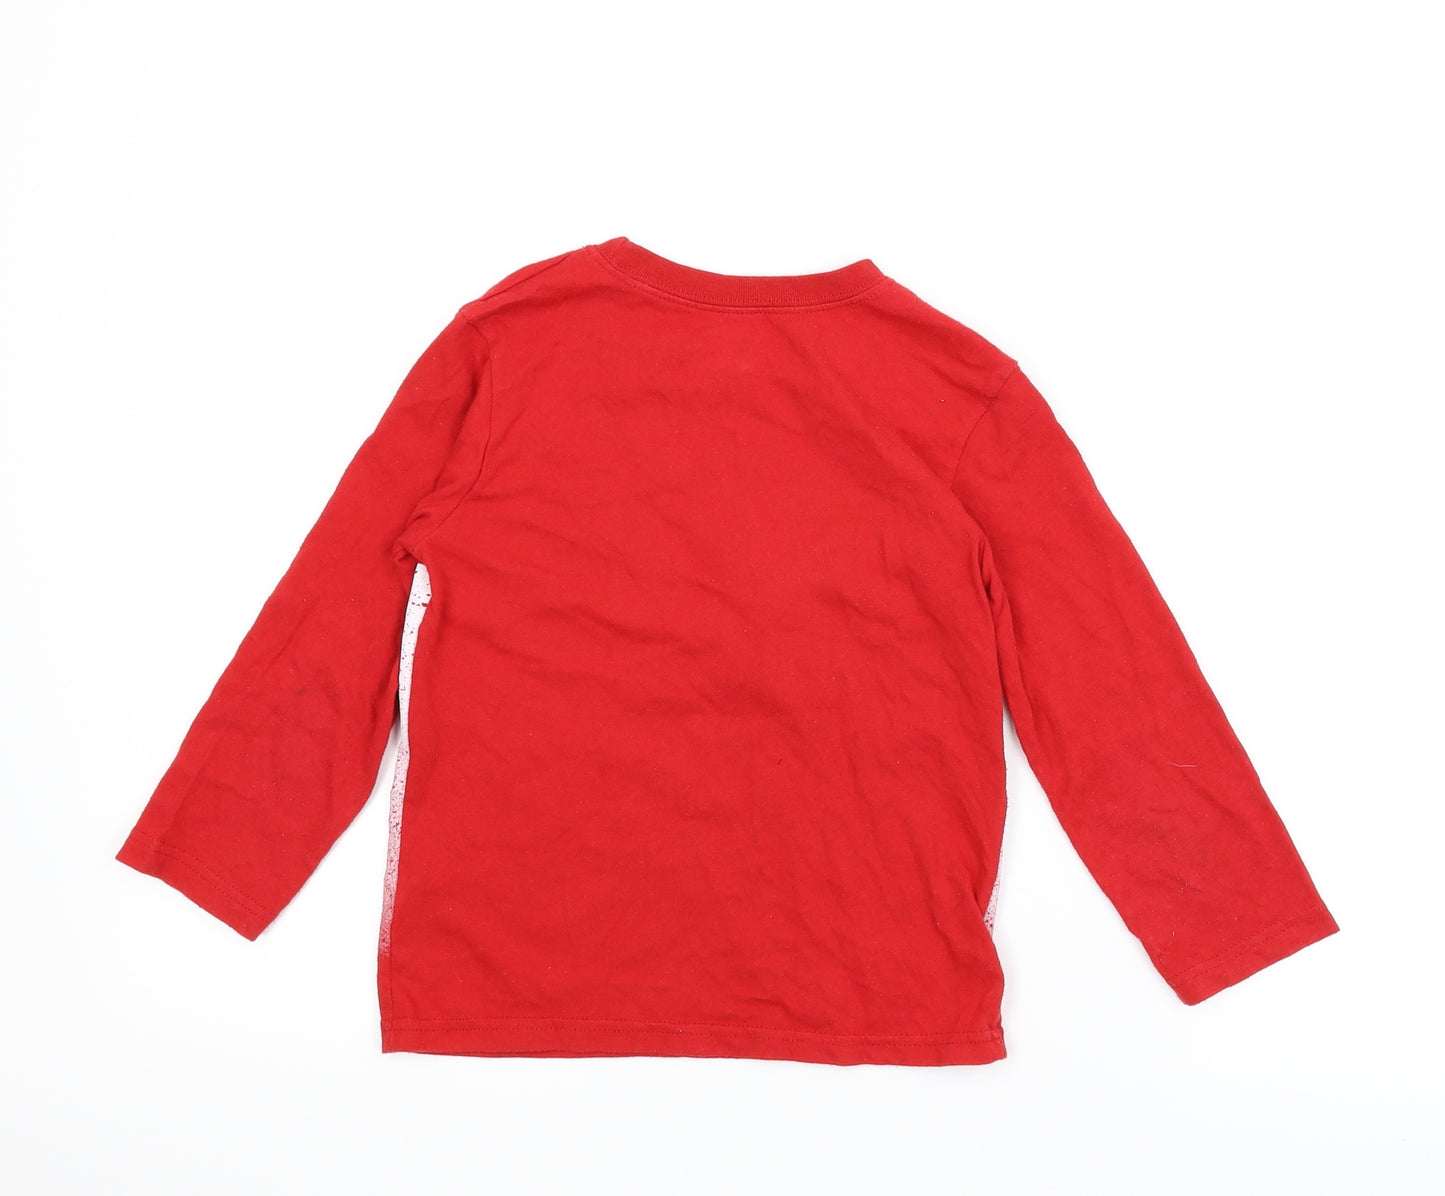 Garanimals Boys Red   Basic T-Shirt Size 5 Years